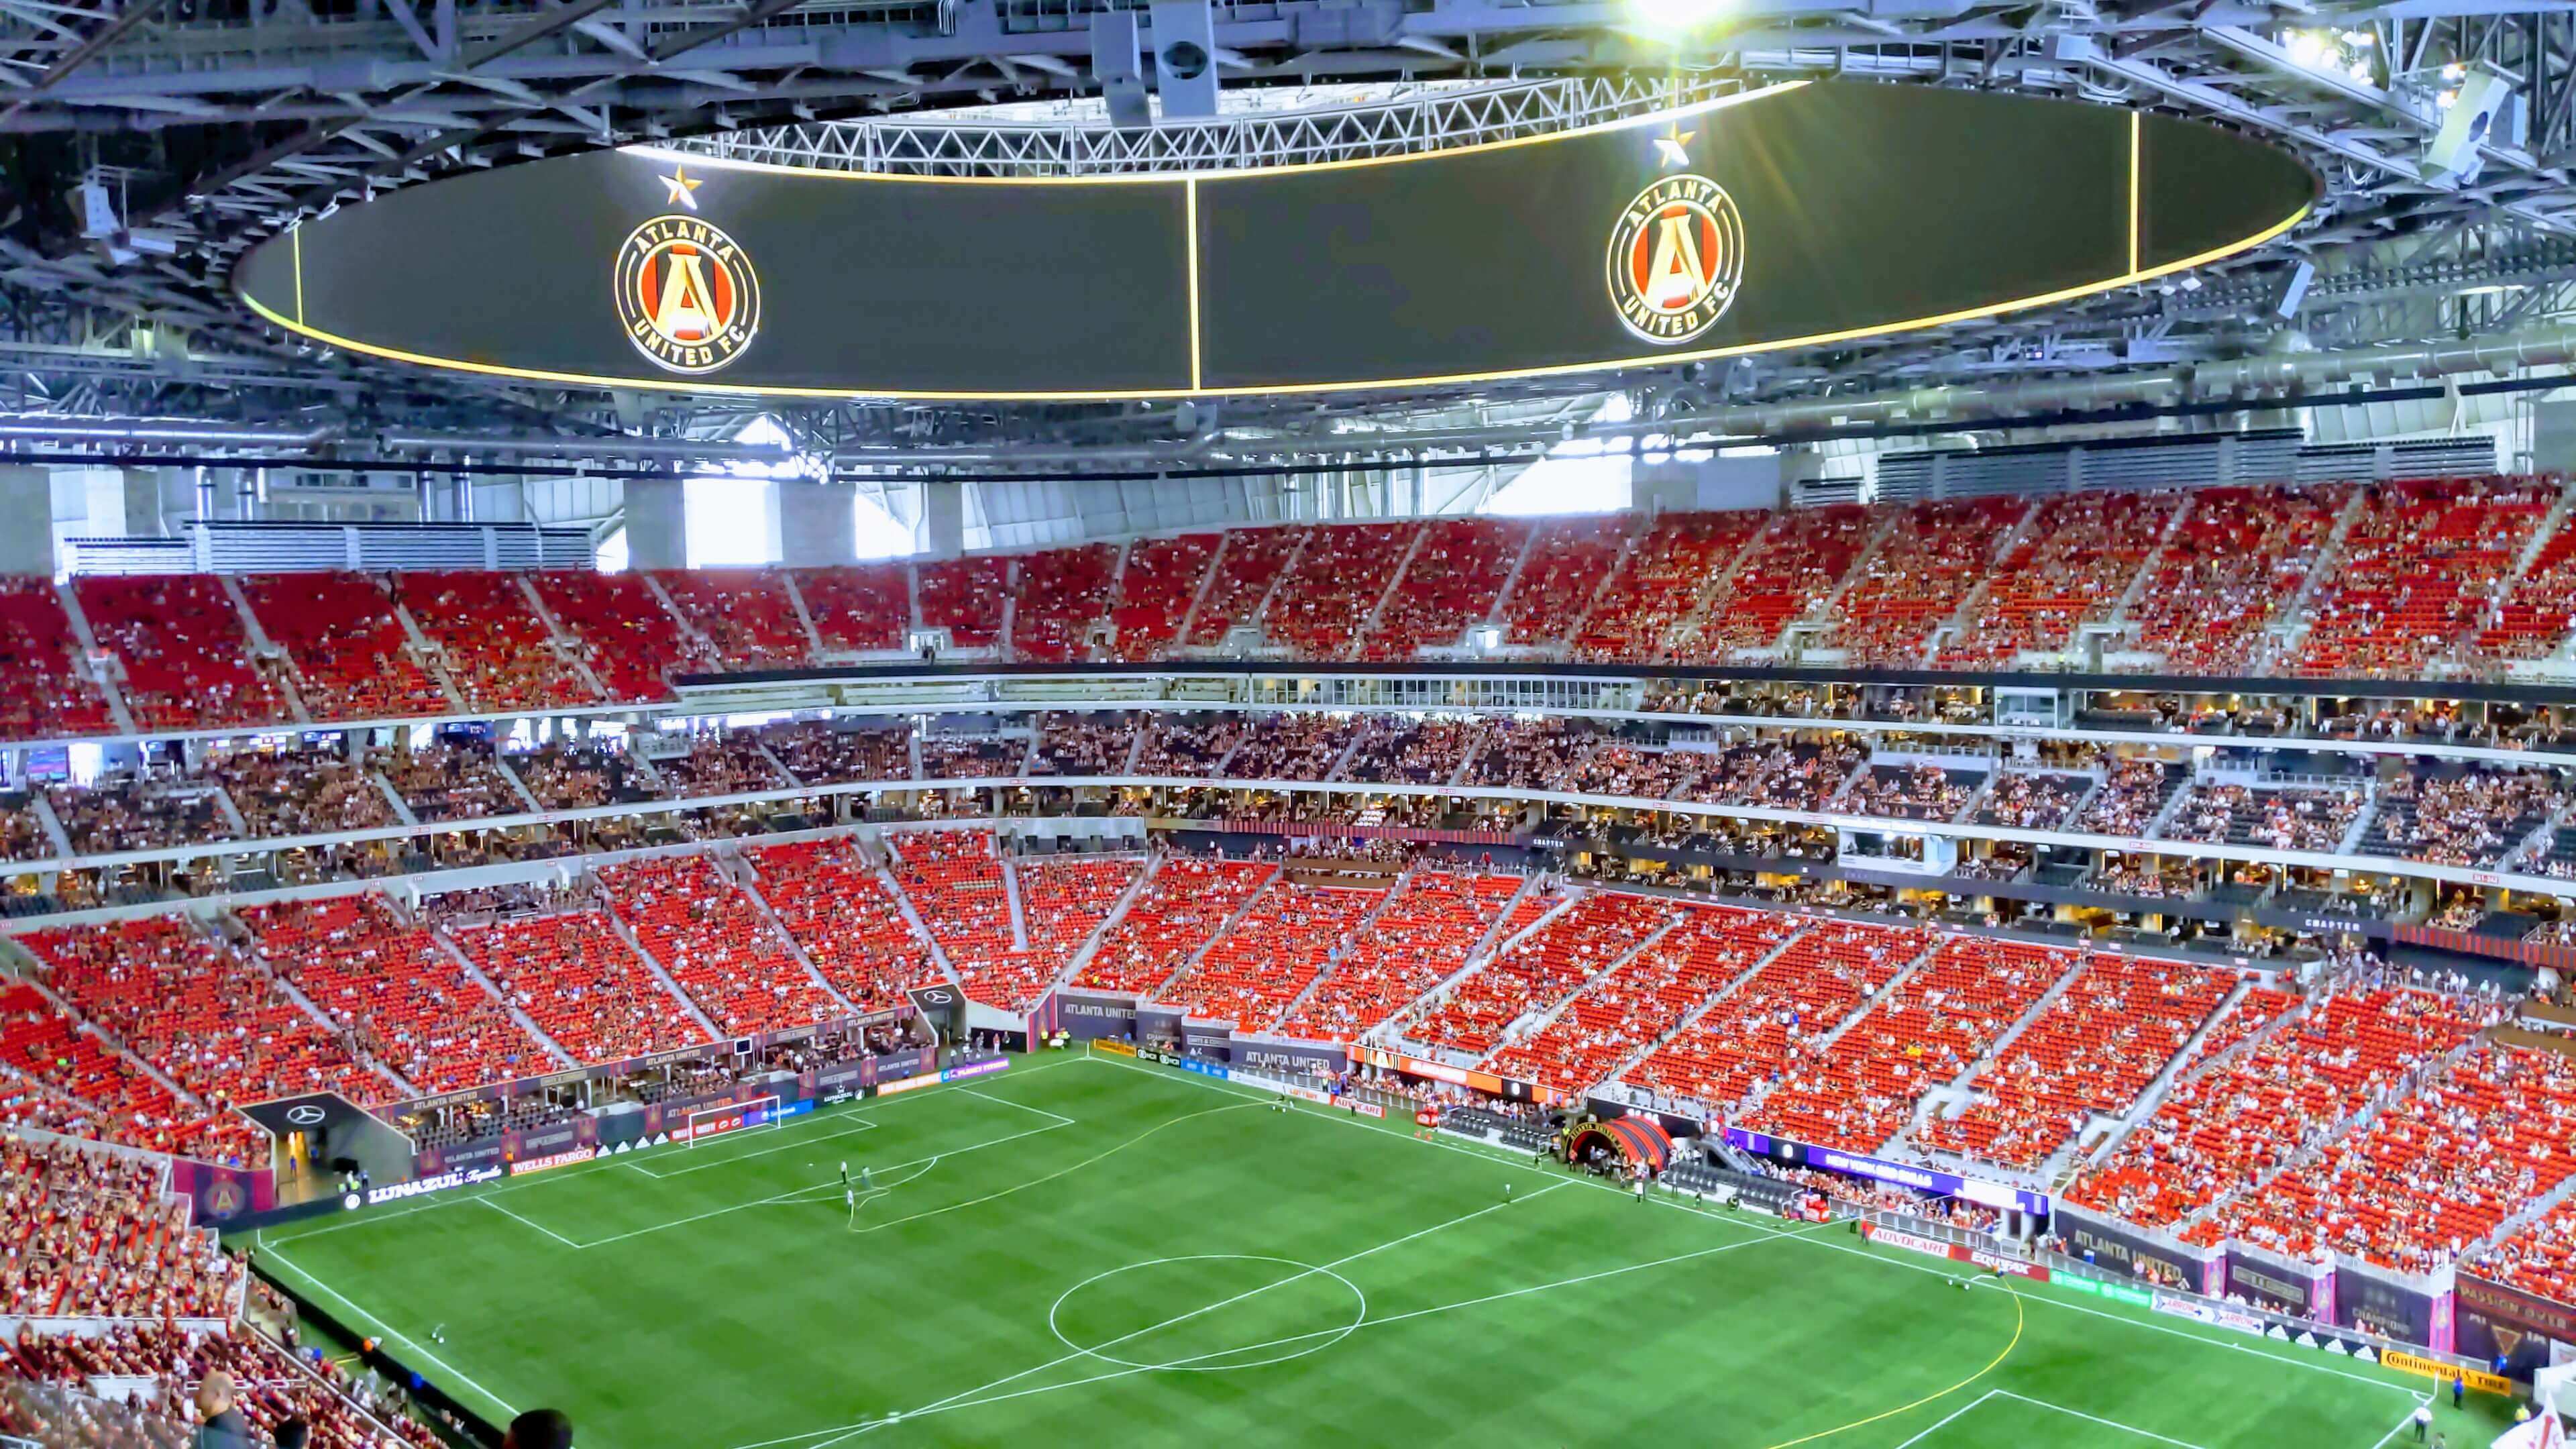 Atlanta united Mercedez Benz soccer stadium | FlyCheapAlways